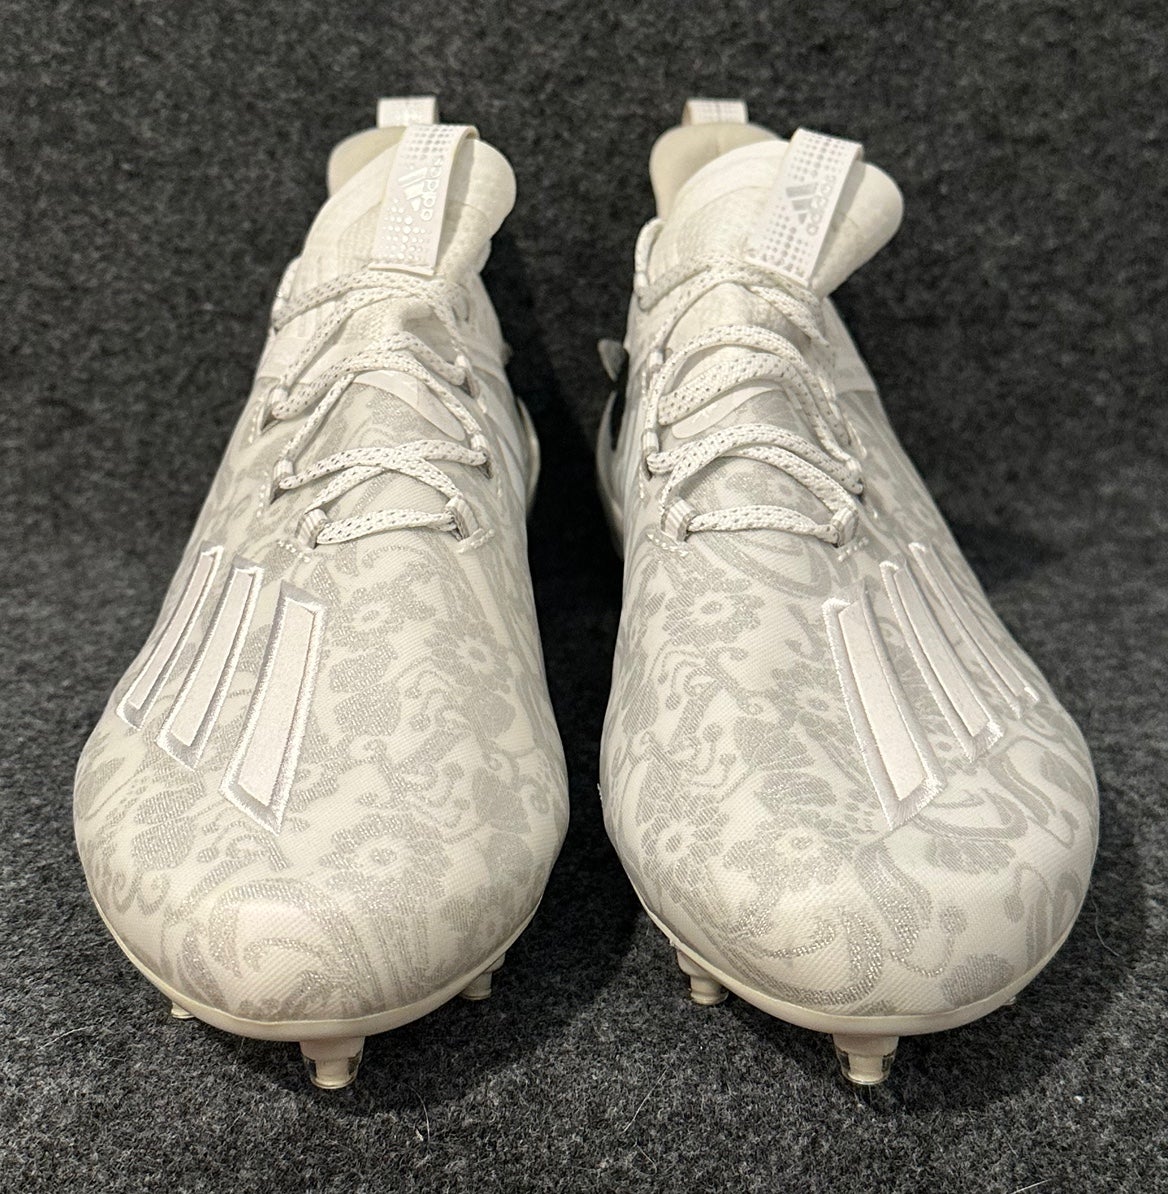 Adidas Adizero Young King Football Cleats White Silver FU6705 Rare